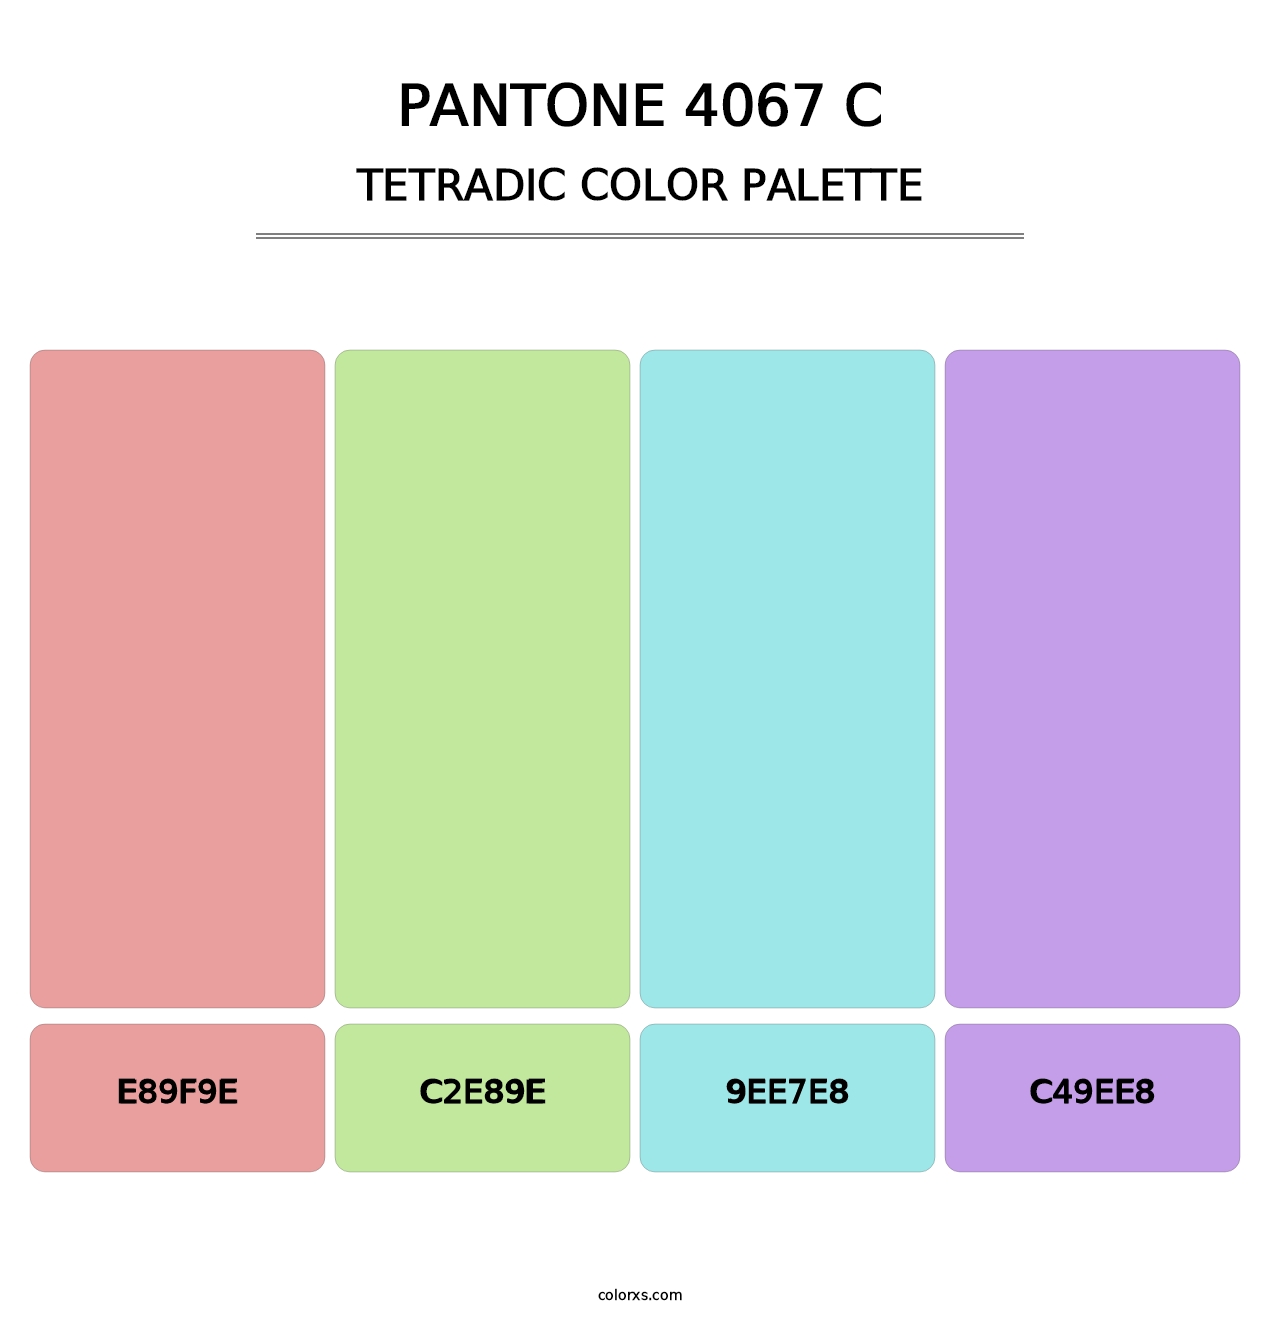 PANTONE 4067 C - Tetradic Color Palette